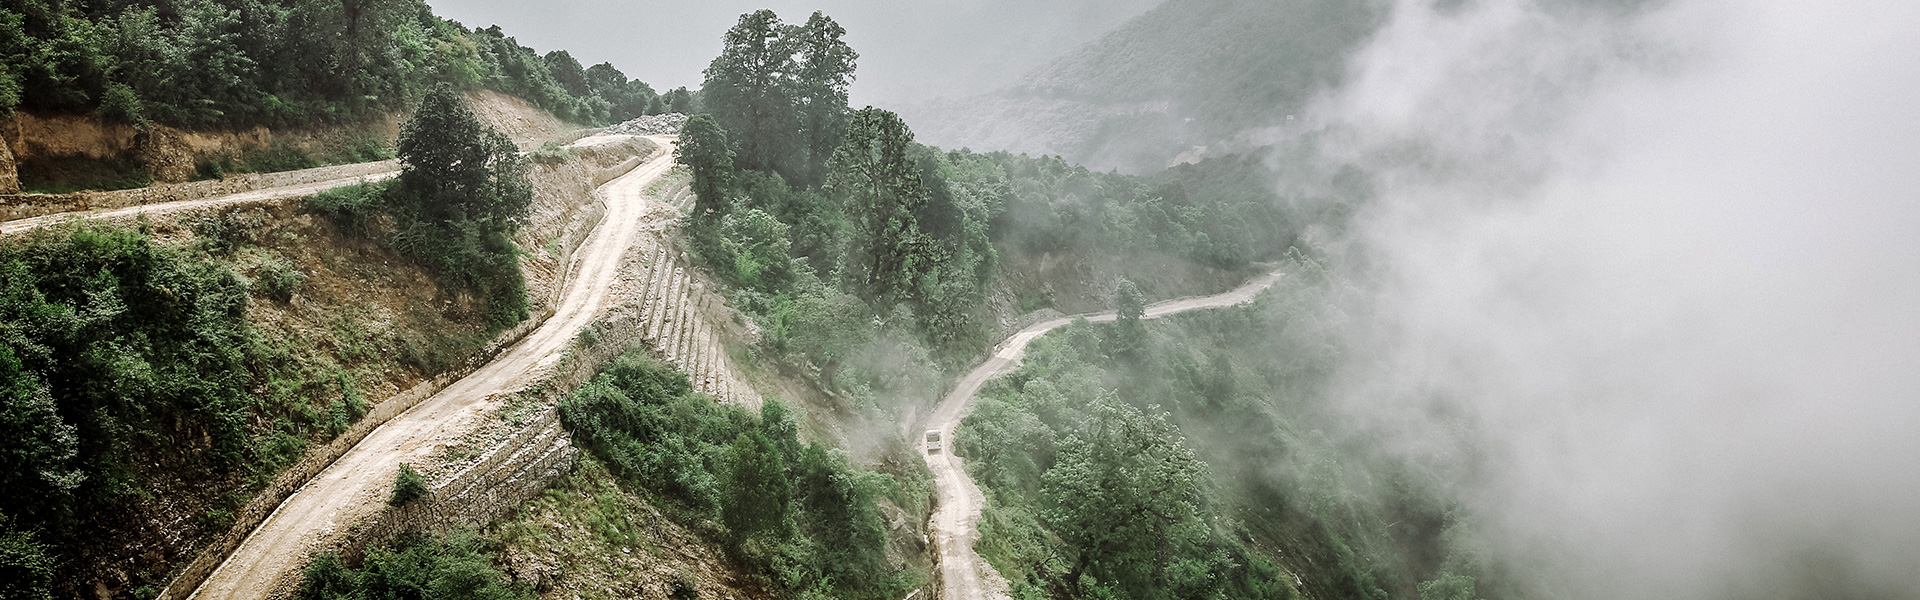 nepal-landscape-steep-hills-roads